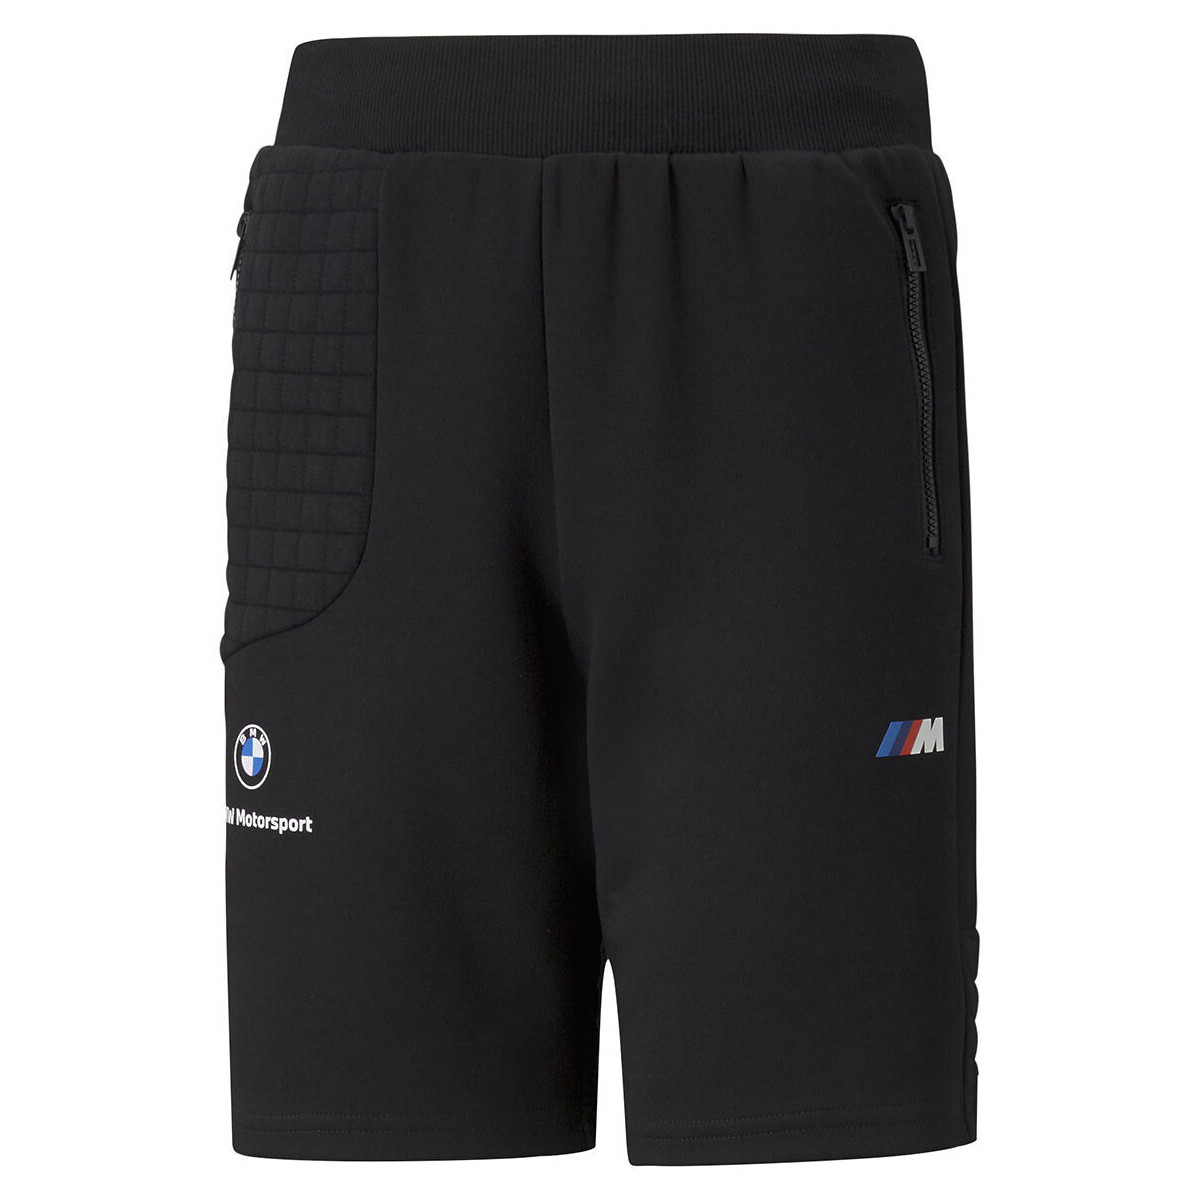 Vêtements Enfant Shorts / Bermudas Puma BMW Motorsport Noir